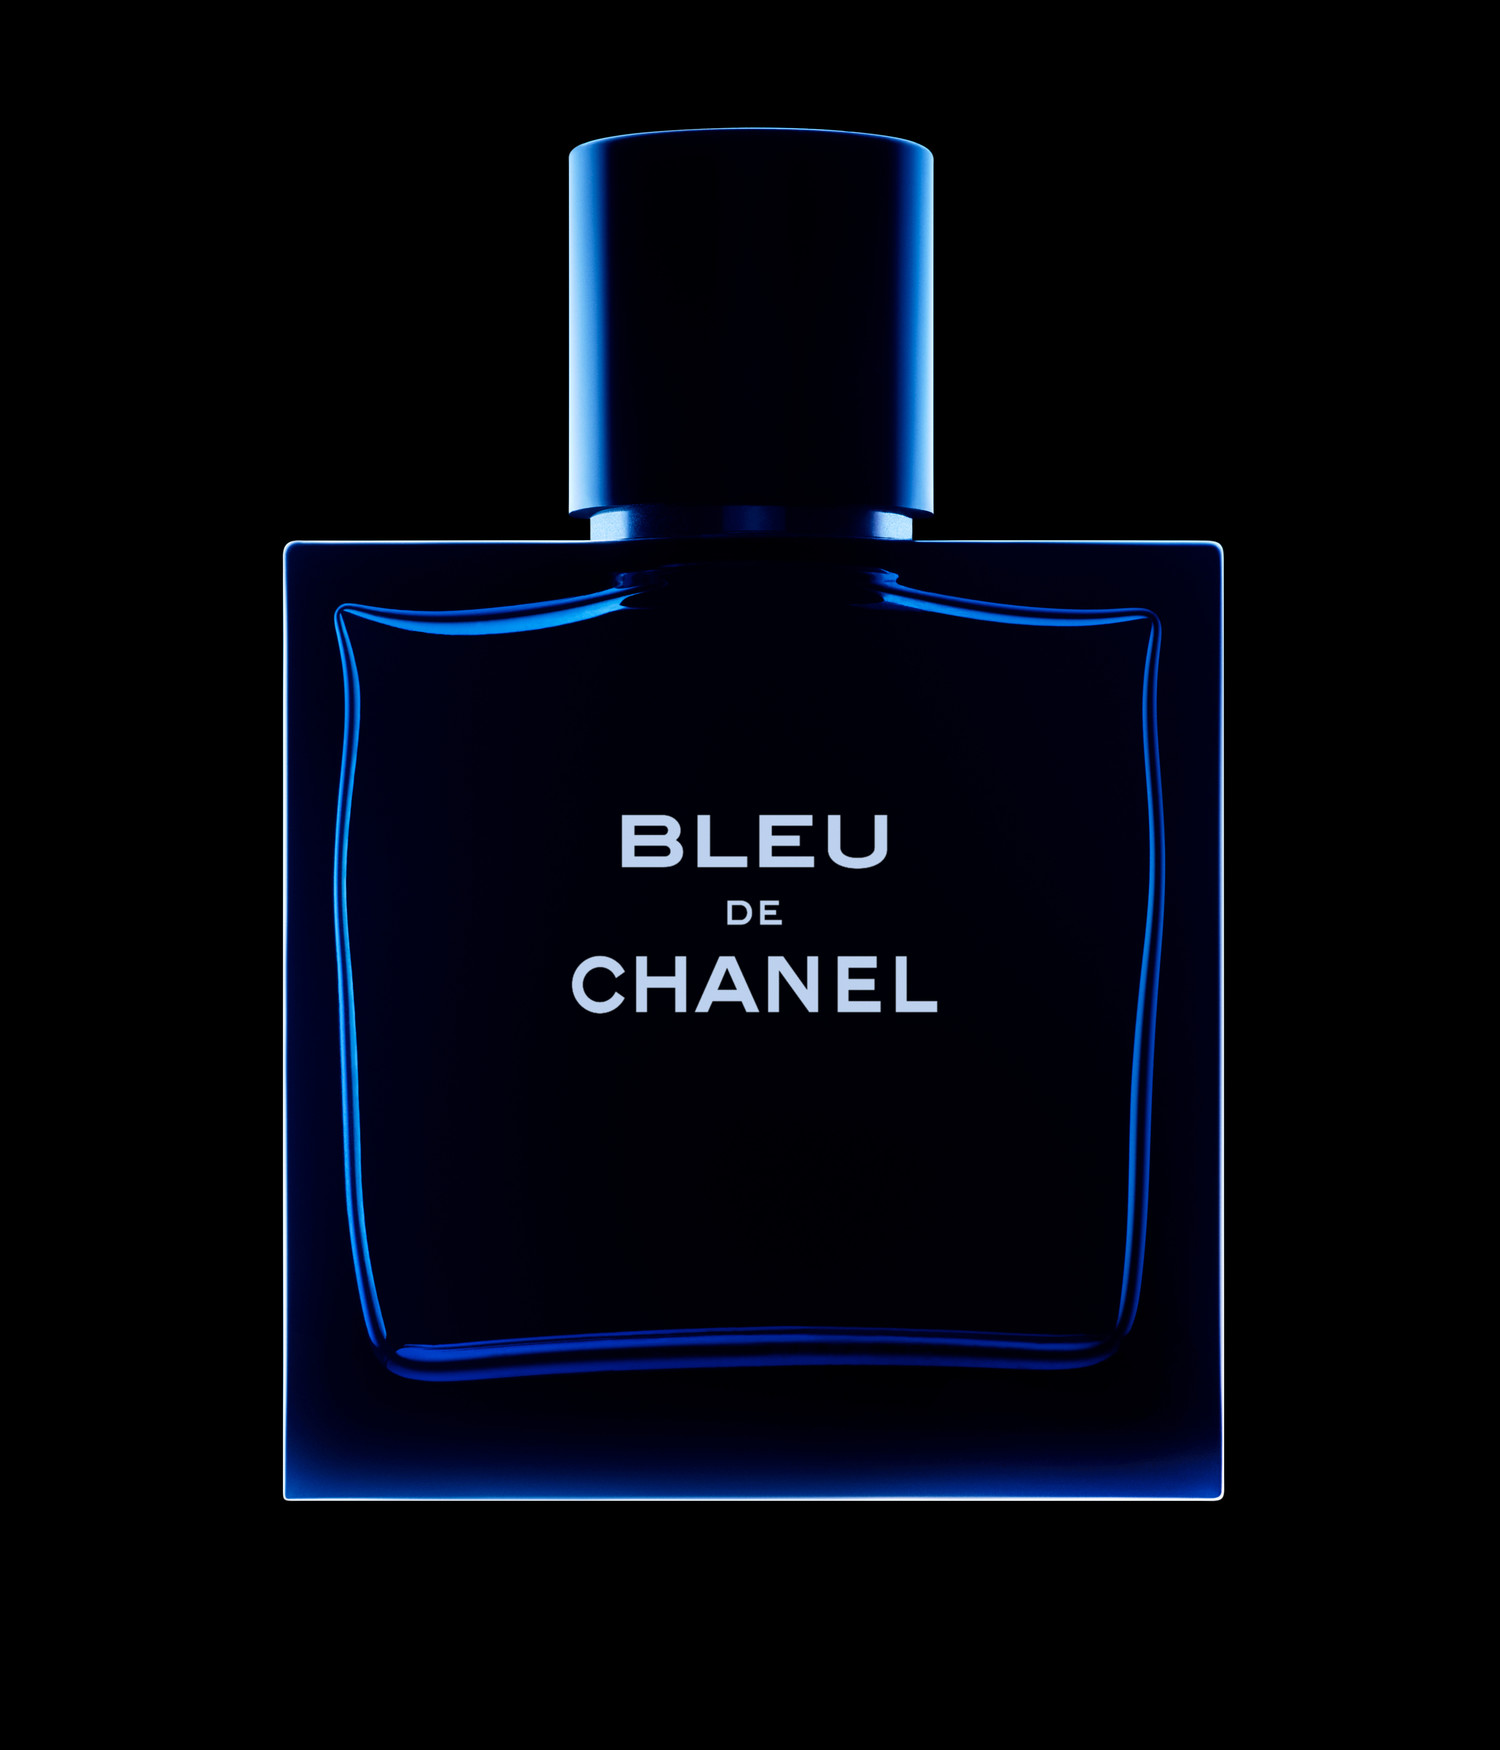 Bleu de Chanel - © Global